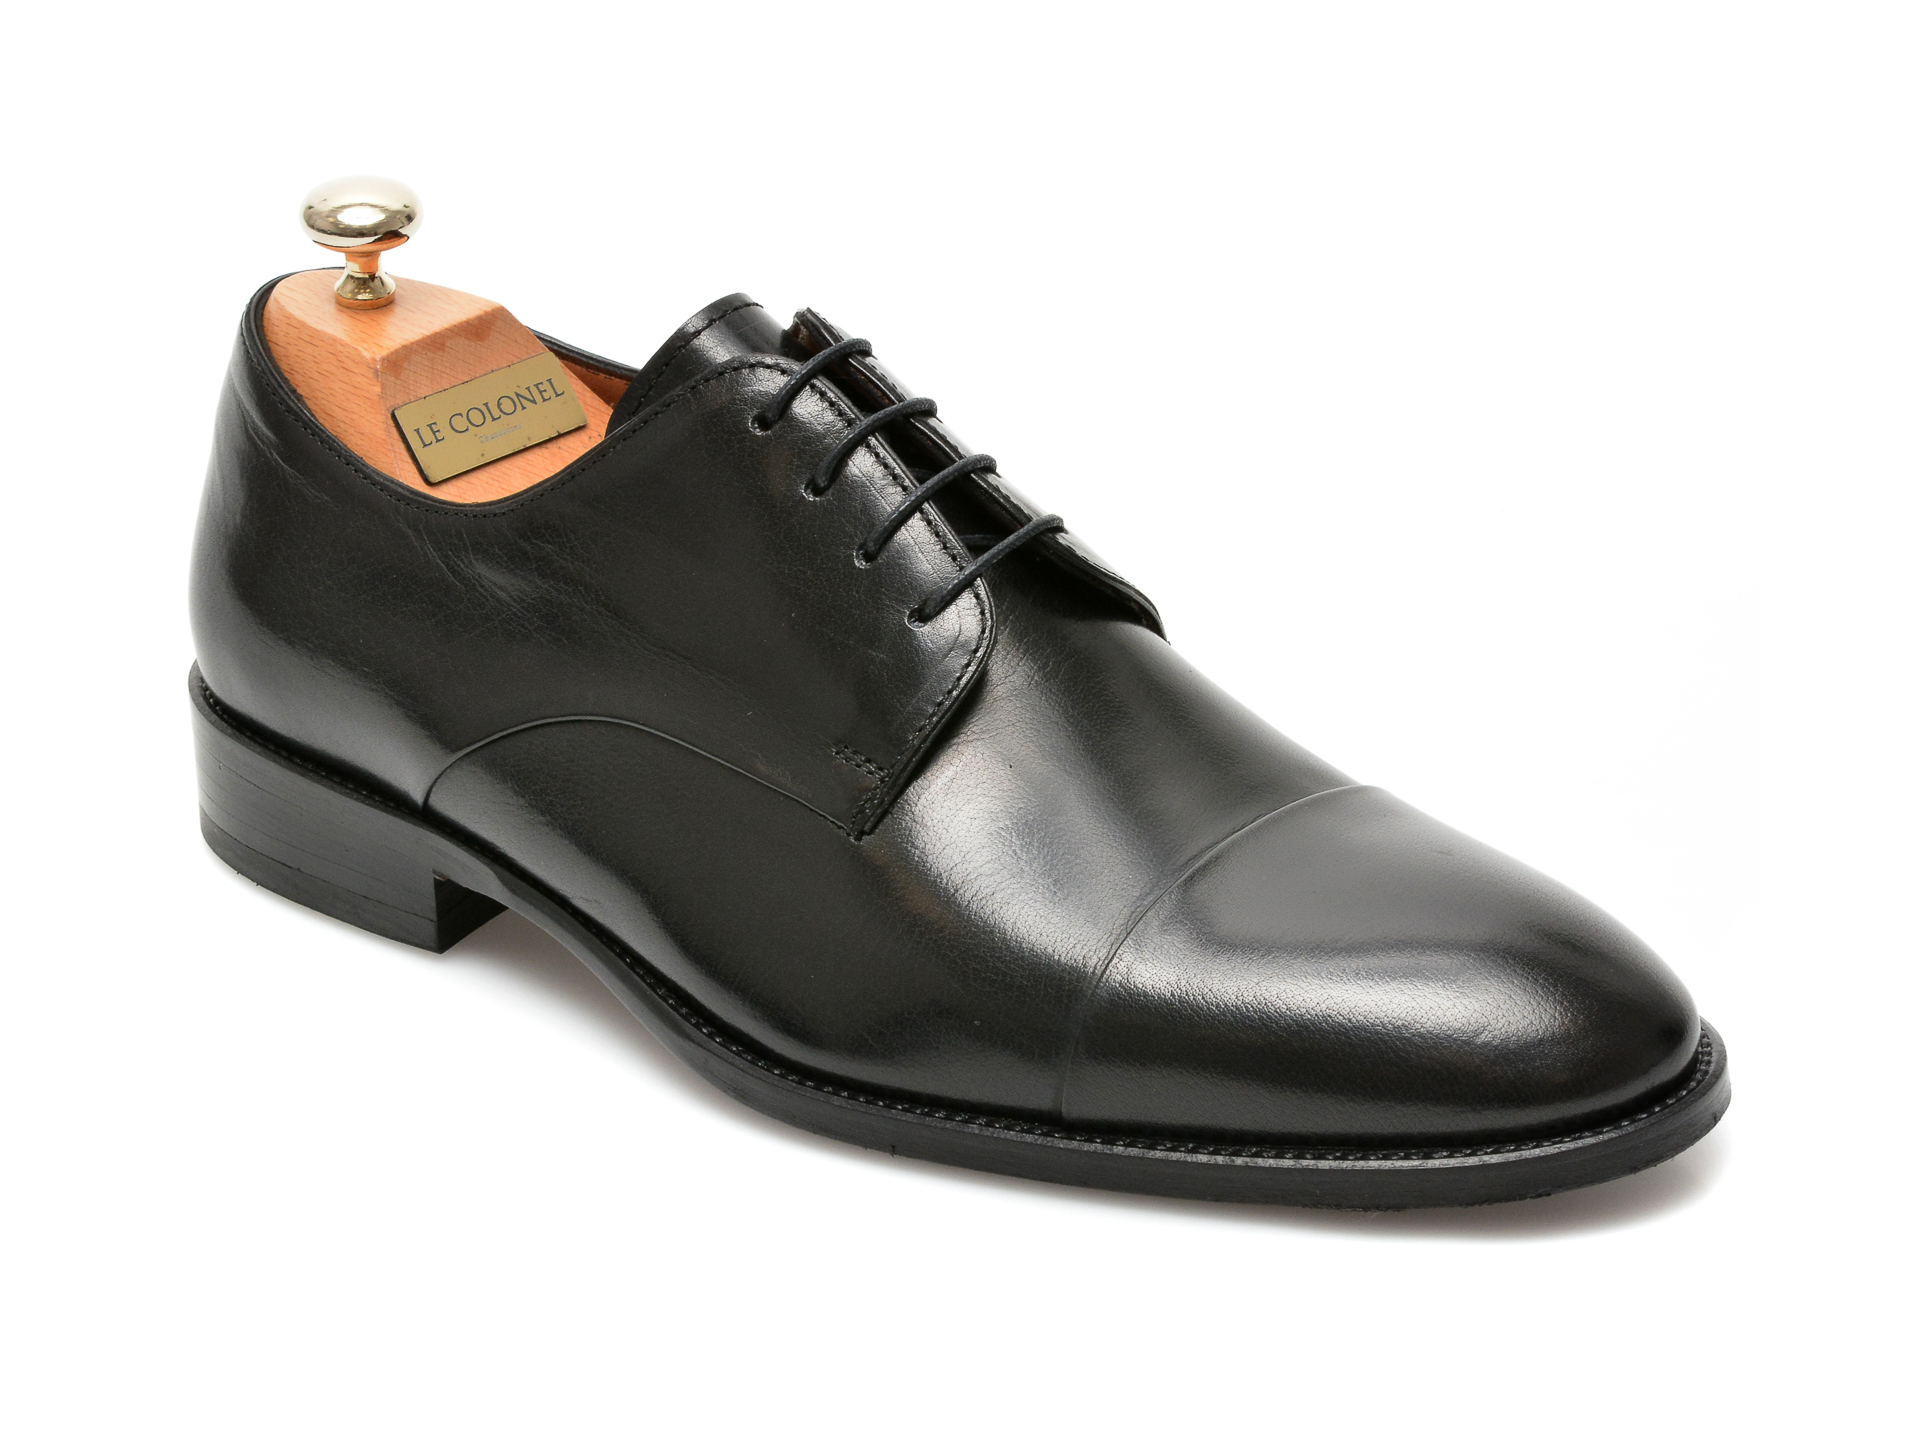 Pantofi LE COLONEL negri, 49809, din piele naturala Le Colonel imagine 2022 13clothing.ro